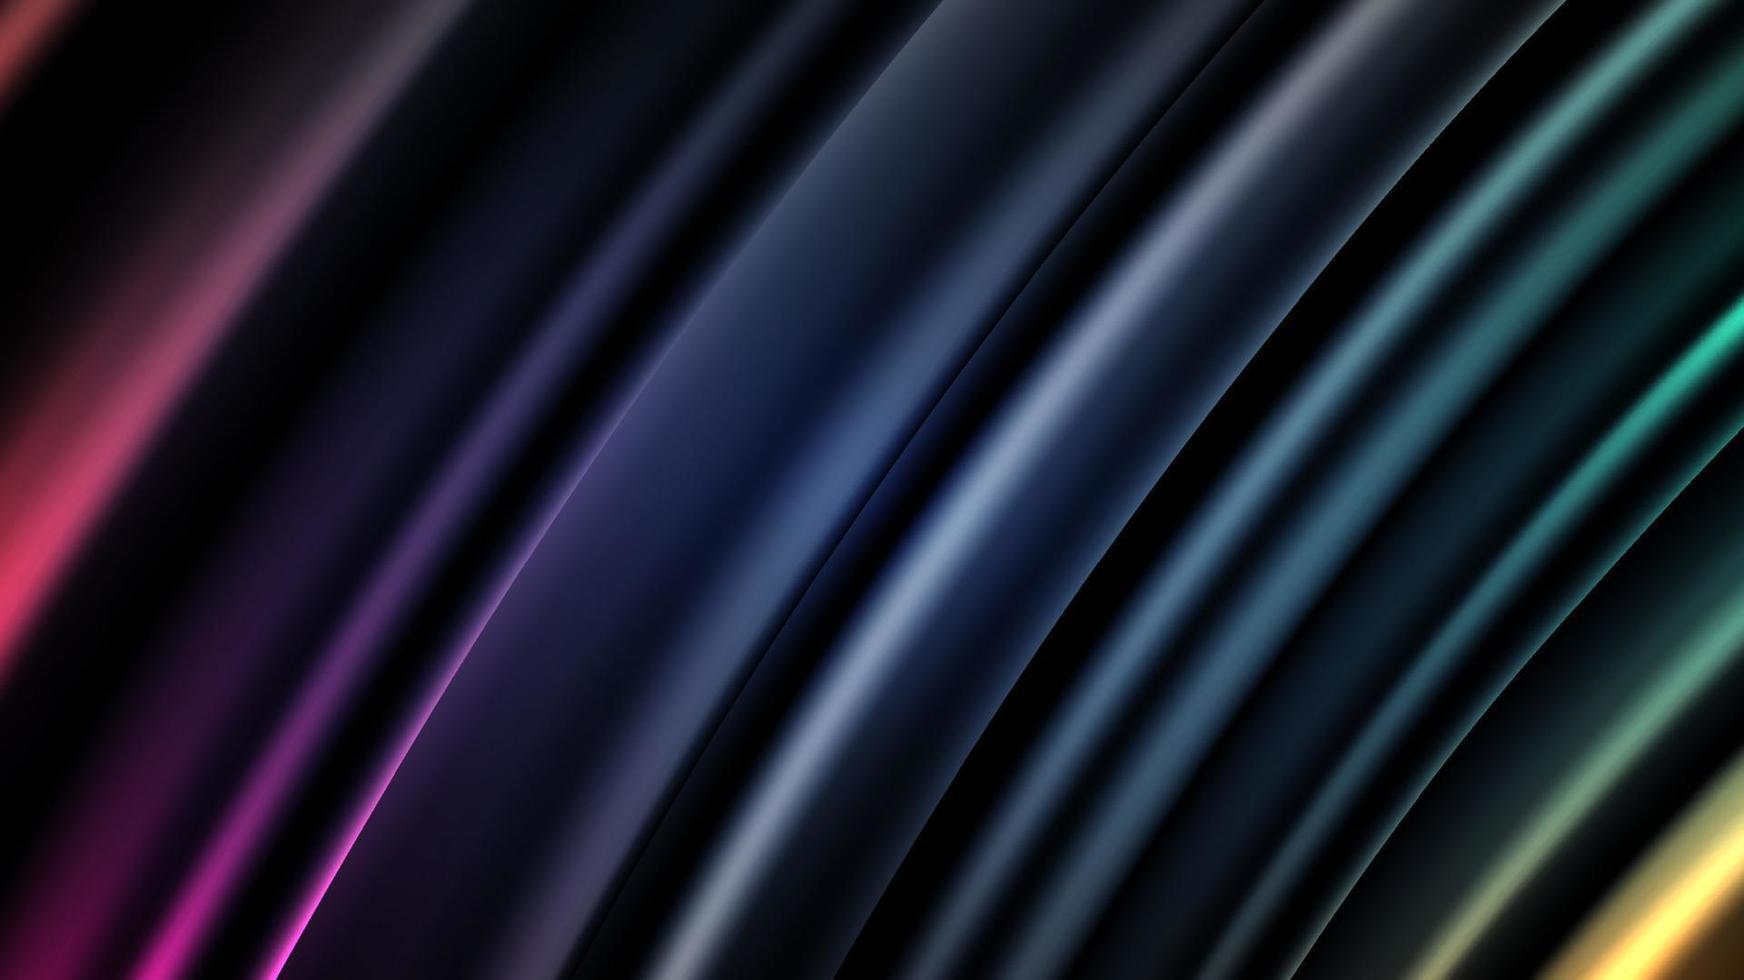 tecnologia moderna abstrata cores neon brilhantes iluminando o movimento fluido em fundo escuro vetor